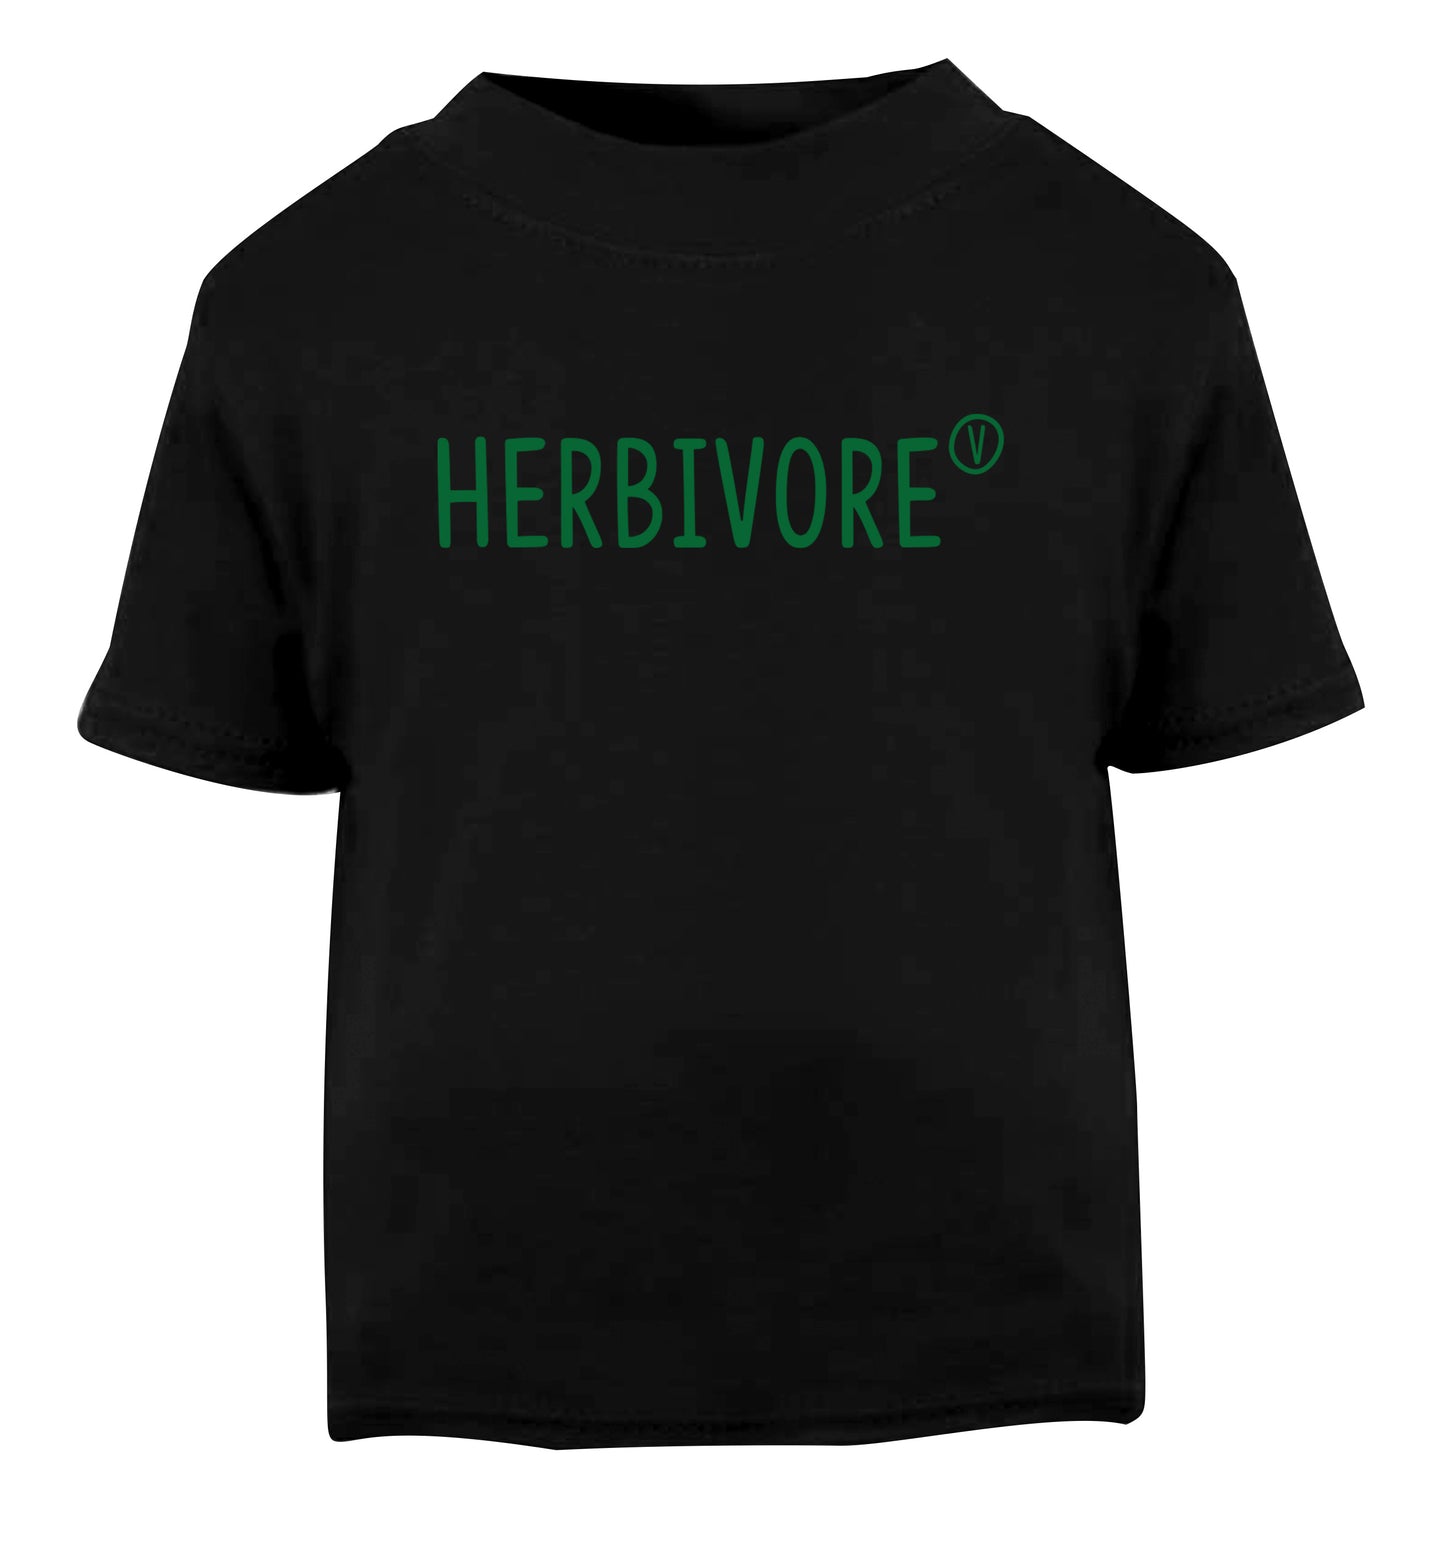 Herbivore Black Baby Toddler Tshirt 2 years